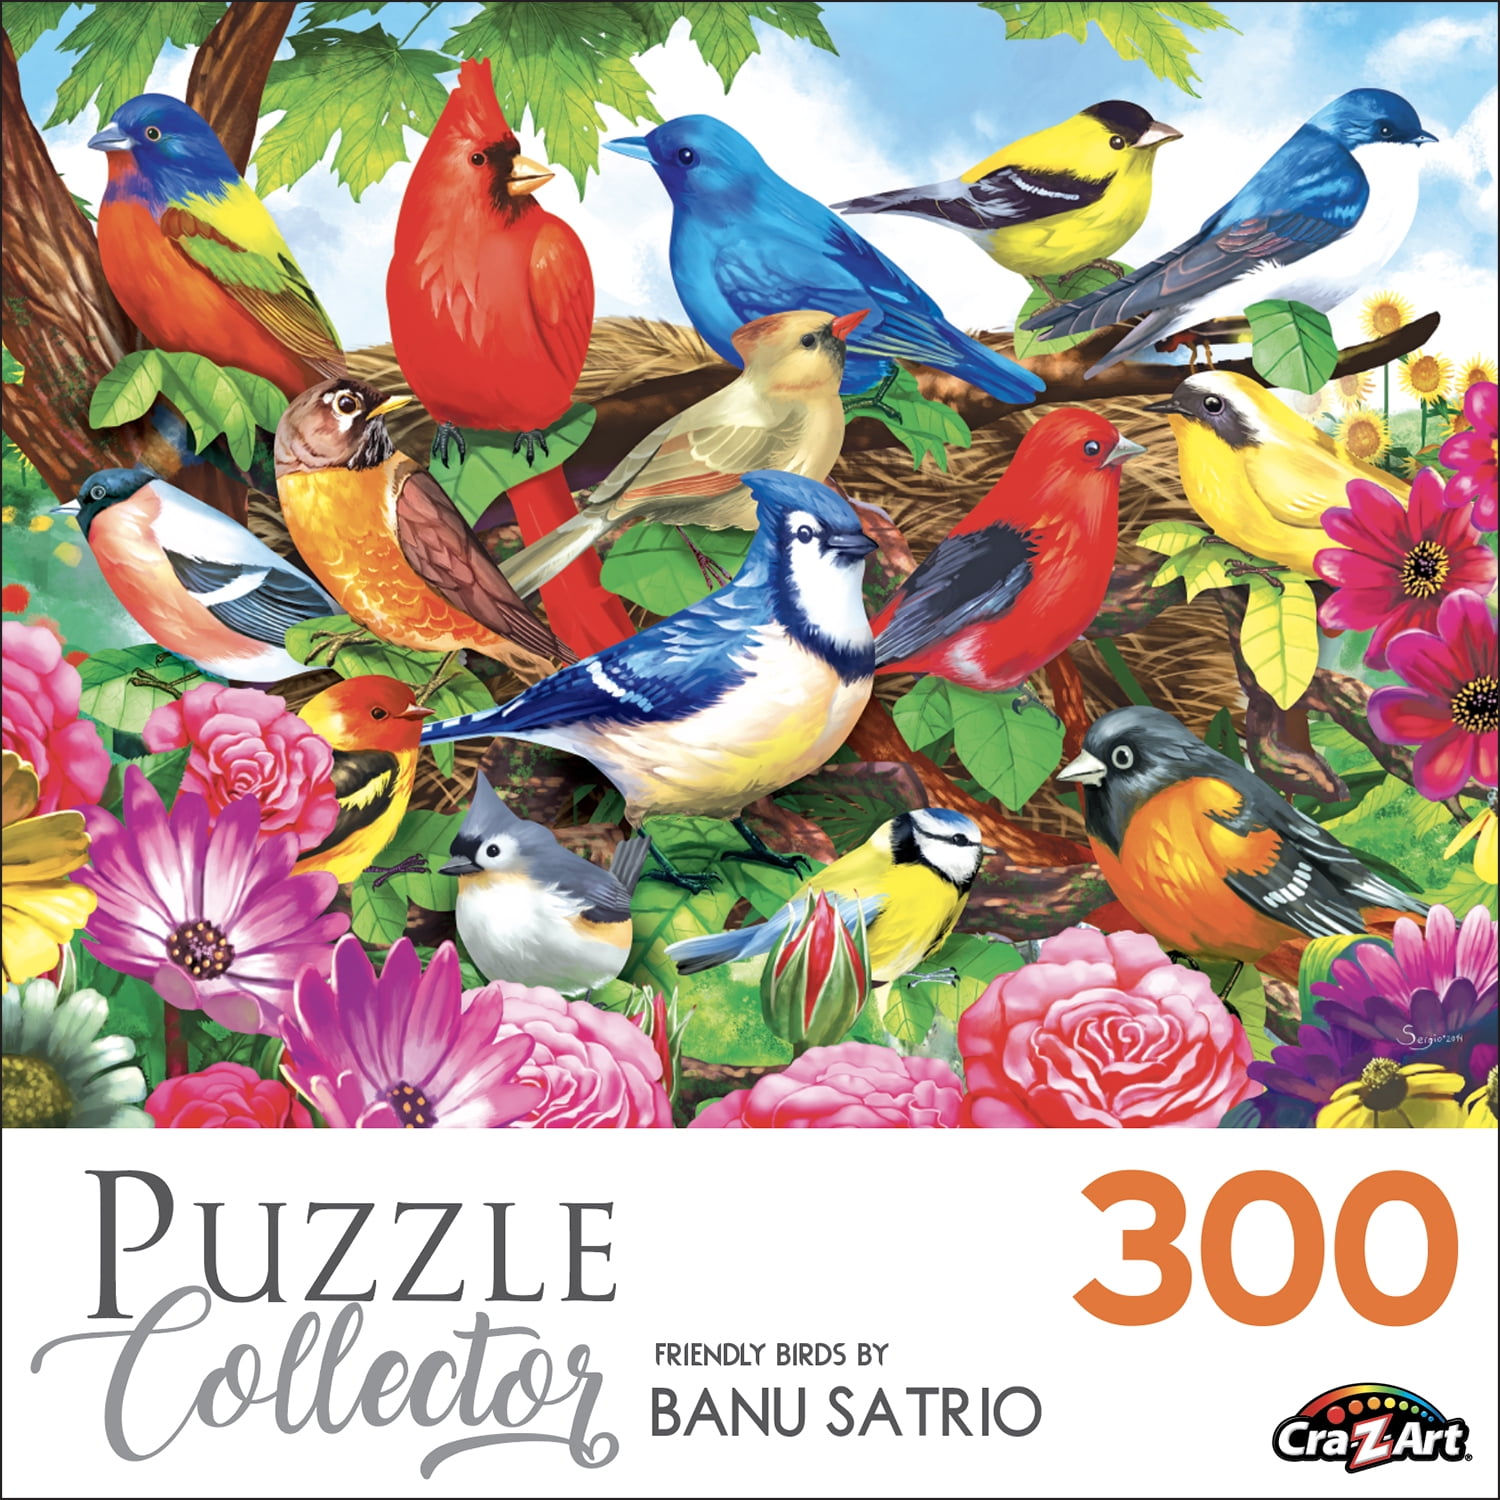 Cra-Z-Art Puzzle Collector 300 Piece Jigsaw Puzzle - Friendly Birds